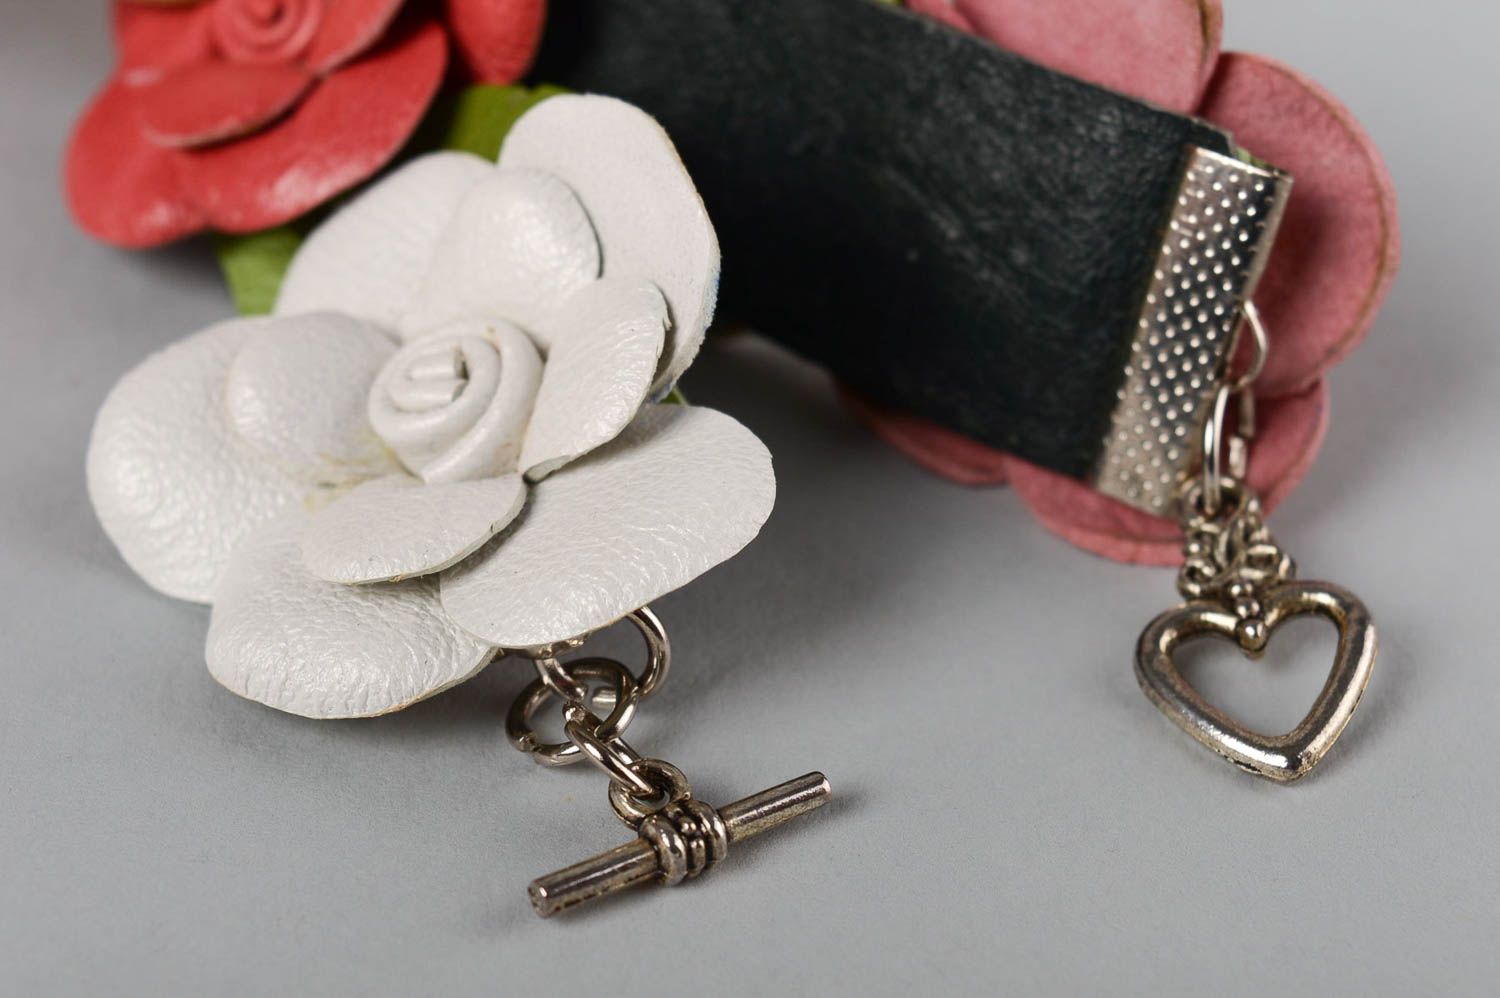 Stylish handmade leather wrist bracelet designer jewelry fashion accessories photo 3